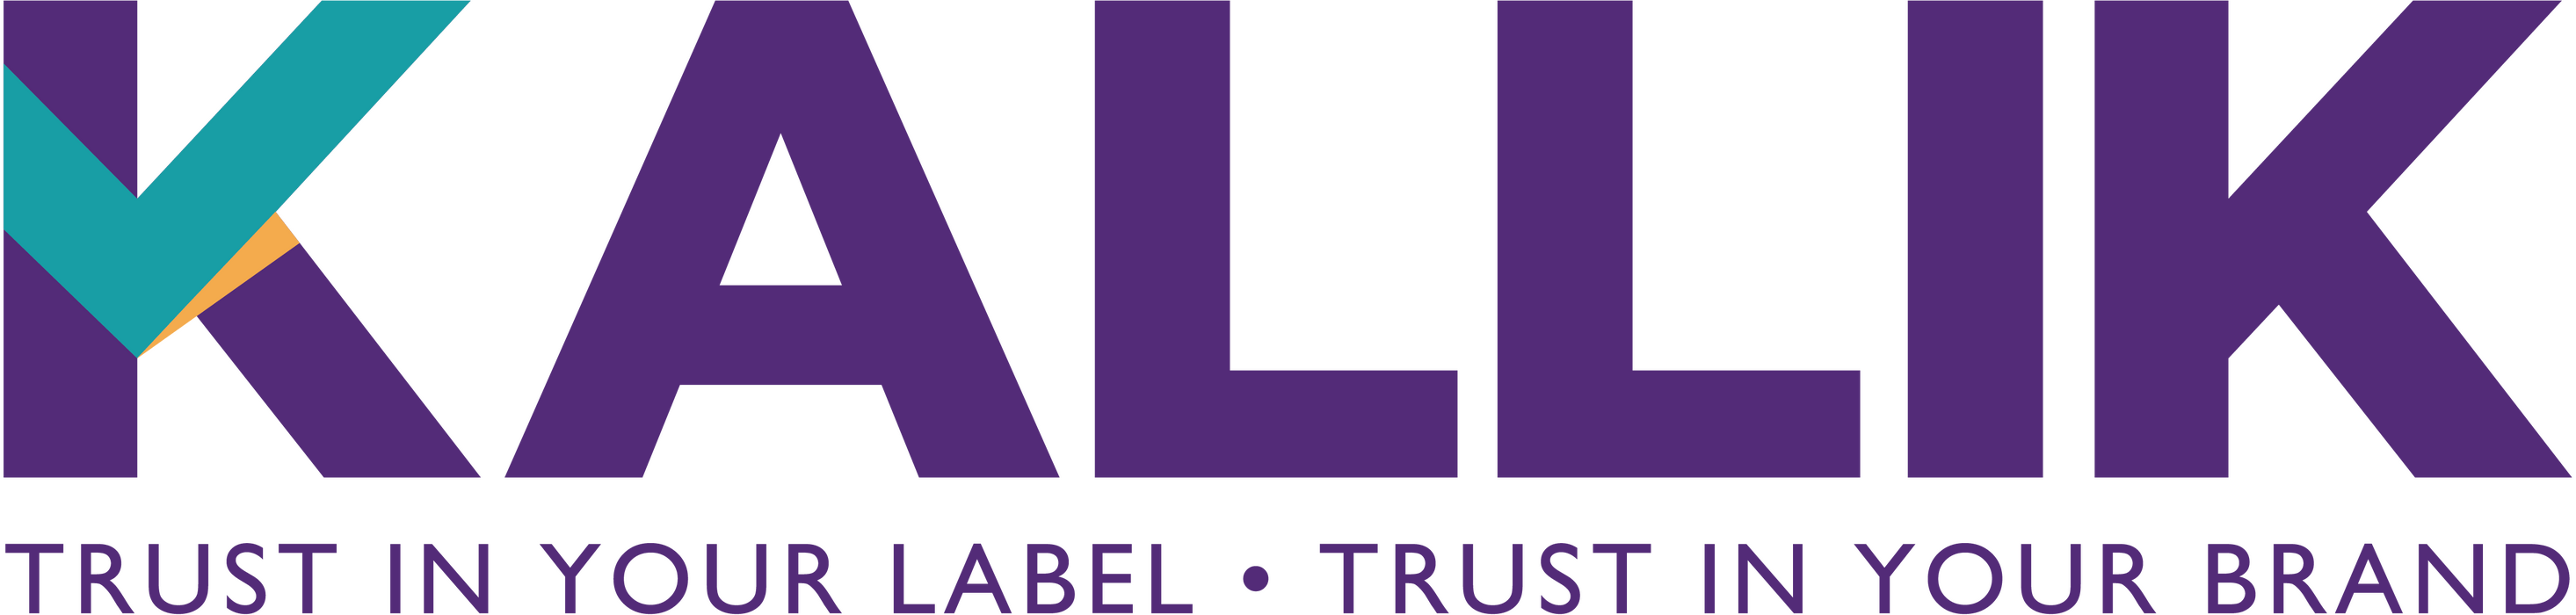 kallik-logo-with-tagline-v2